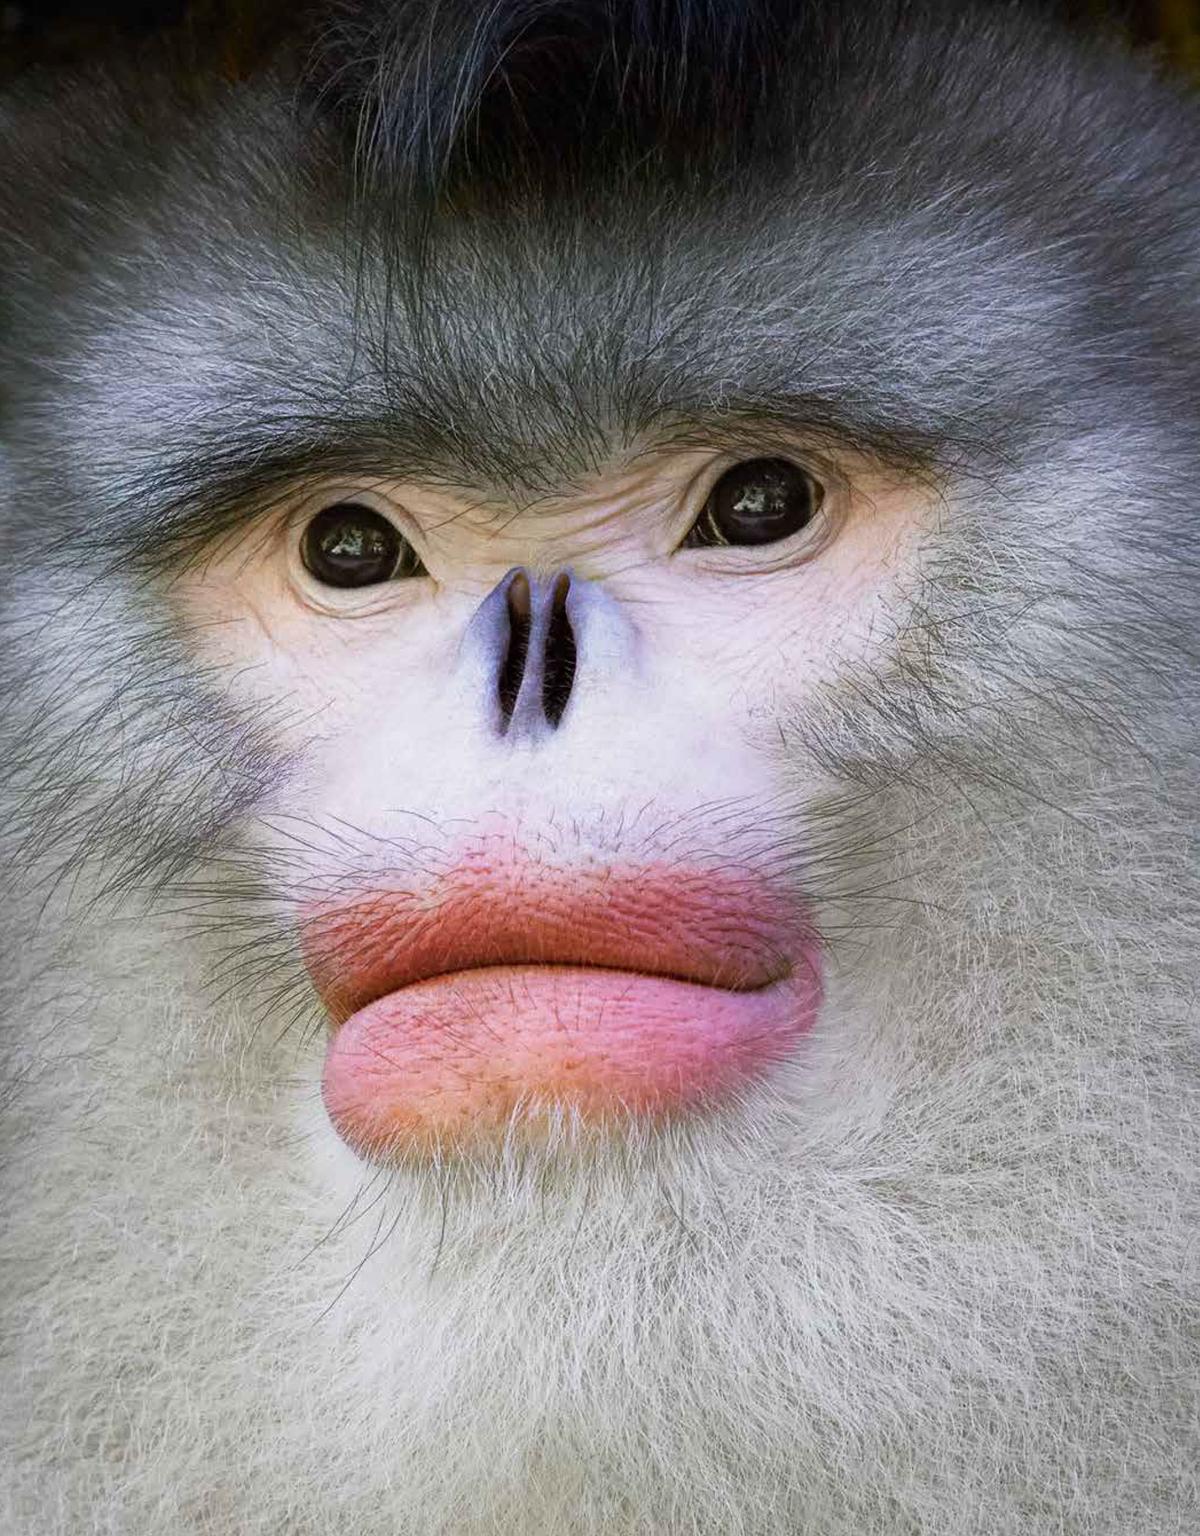 Close-up of a Yunnan snub-nosed monkey. (Courtesy of <a href="https://timflach.com/">Tim Flach</a>)